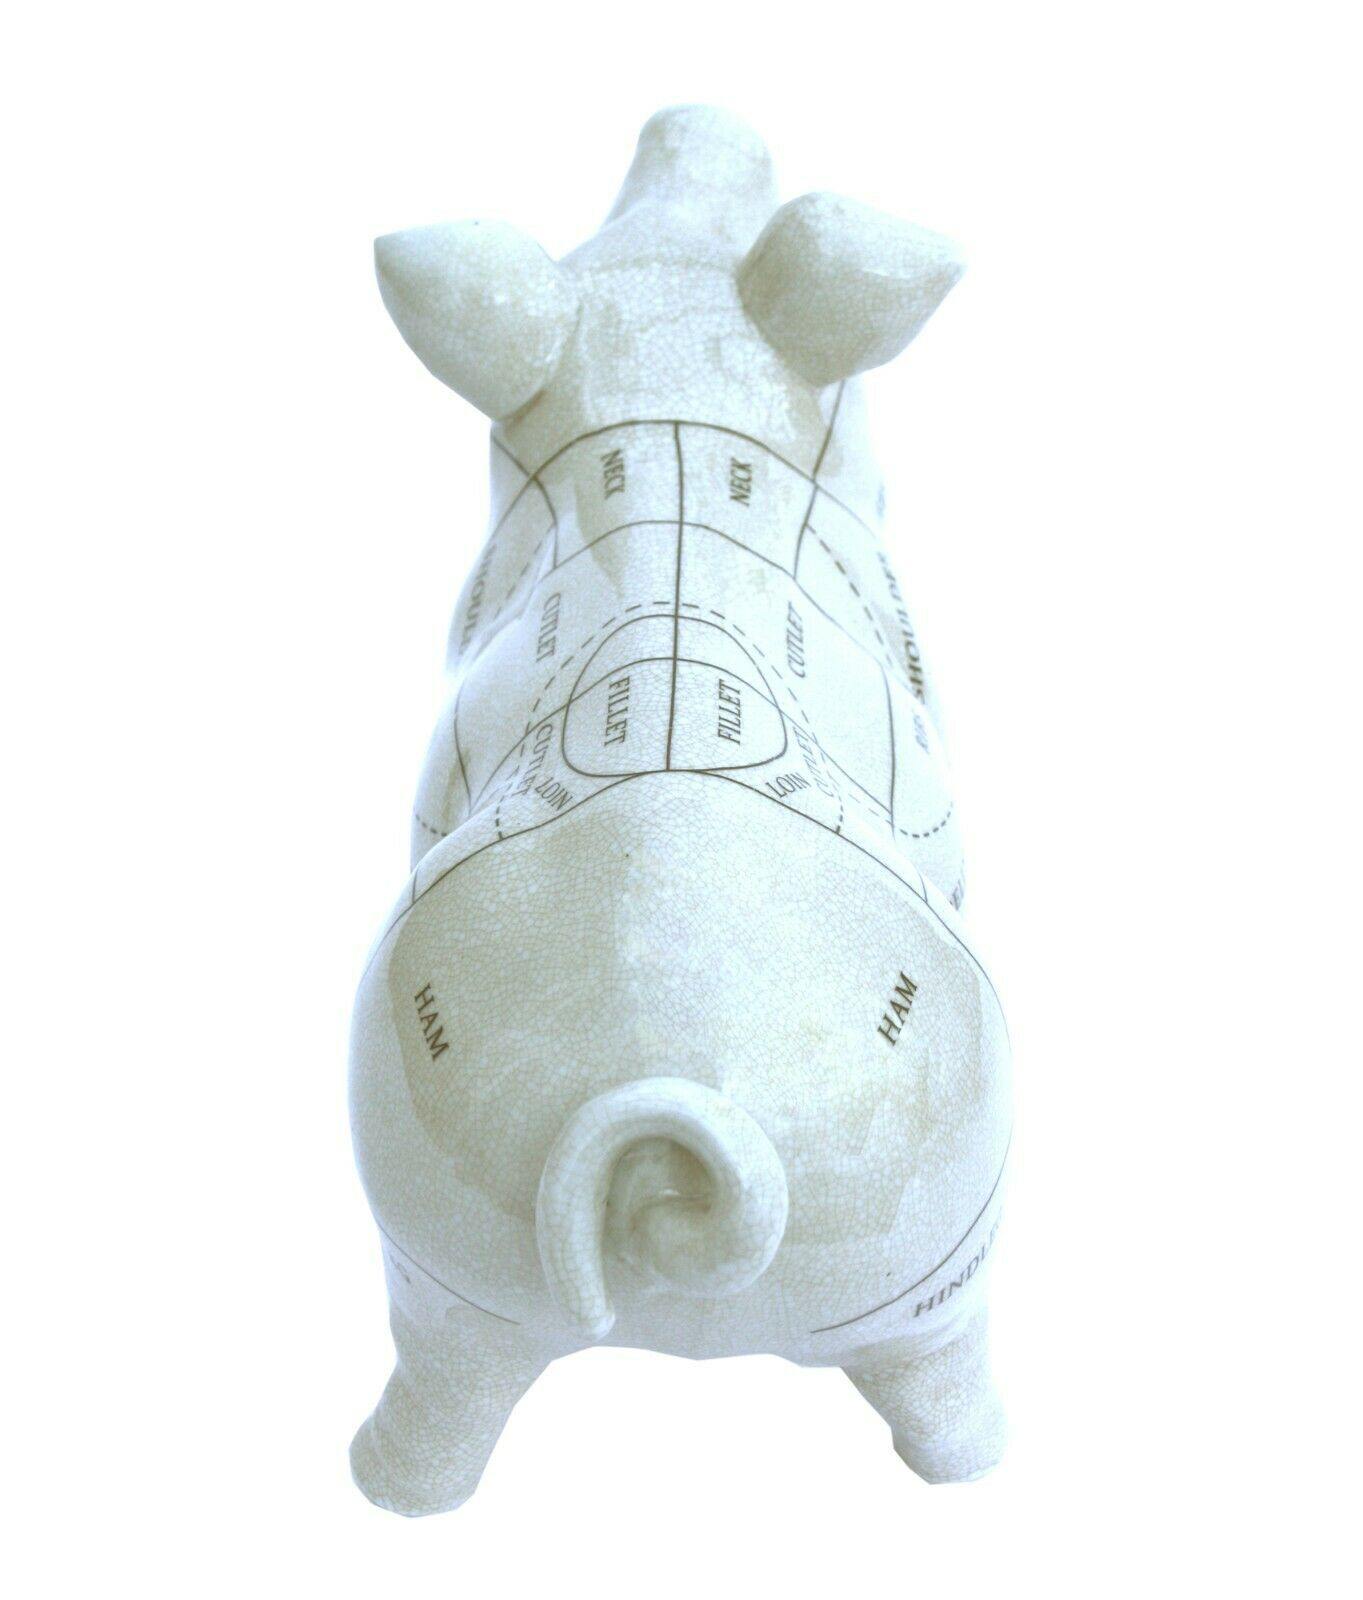 Ceramic Pig Ornament with Butcher's Cuts Diagram Kitchen Sculpture 32cm - Kporium Home & Garden